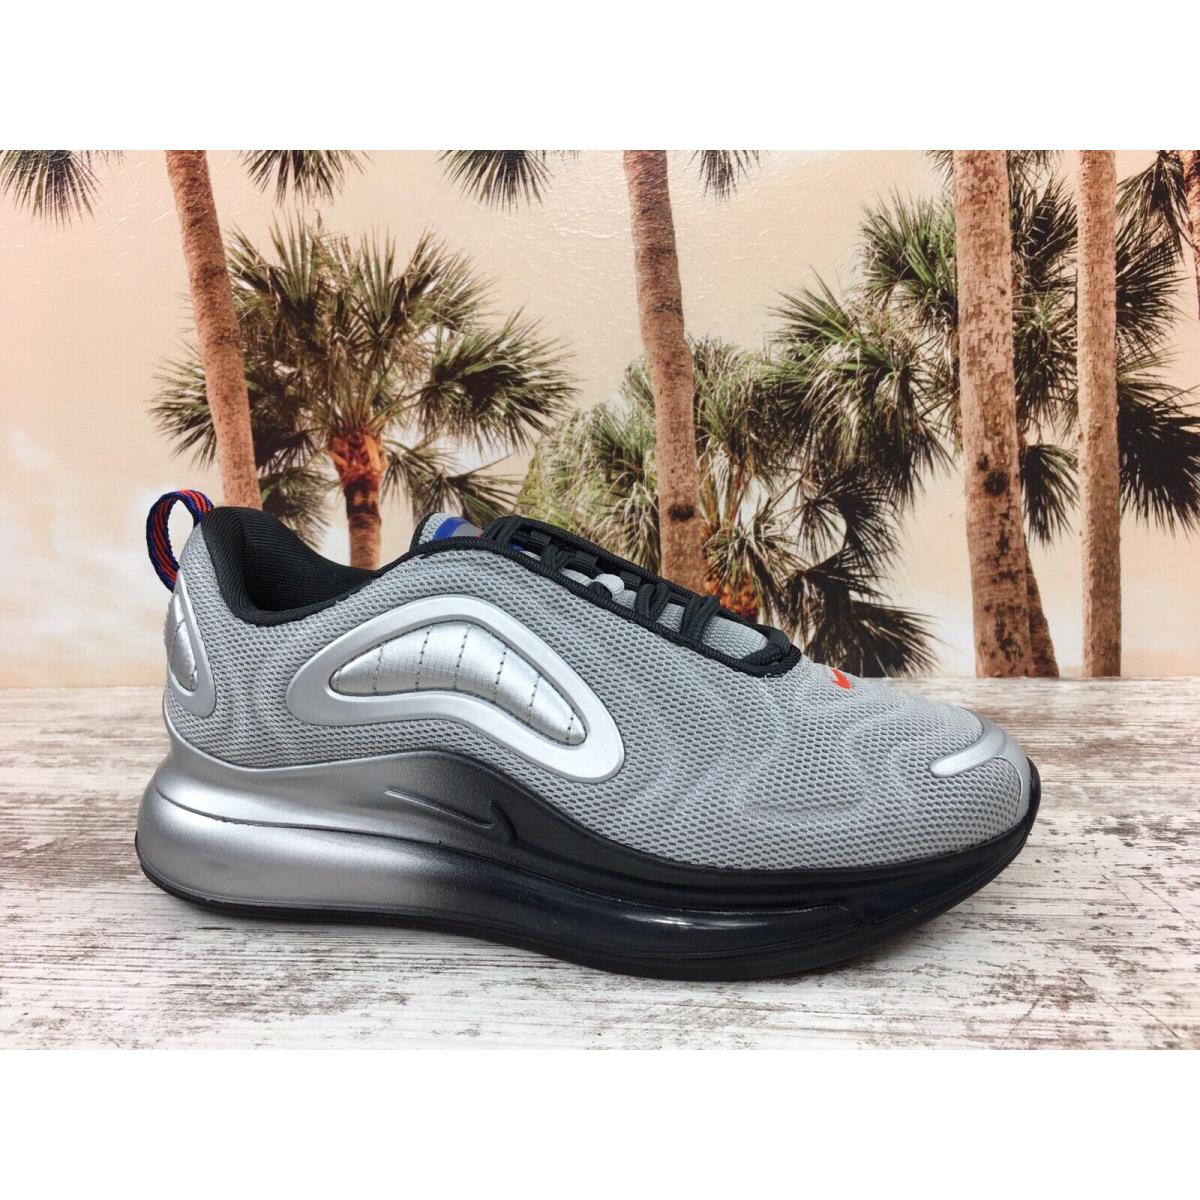 Nike Air Max 720 GS Metallic Silver Sneakers AQ3196-012 Size 5Y - Womens 6.5 - Gray